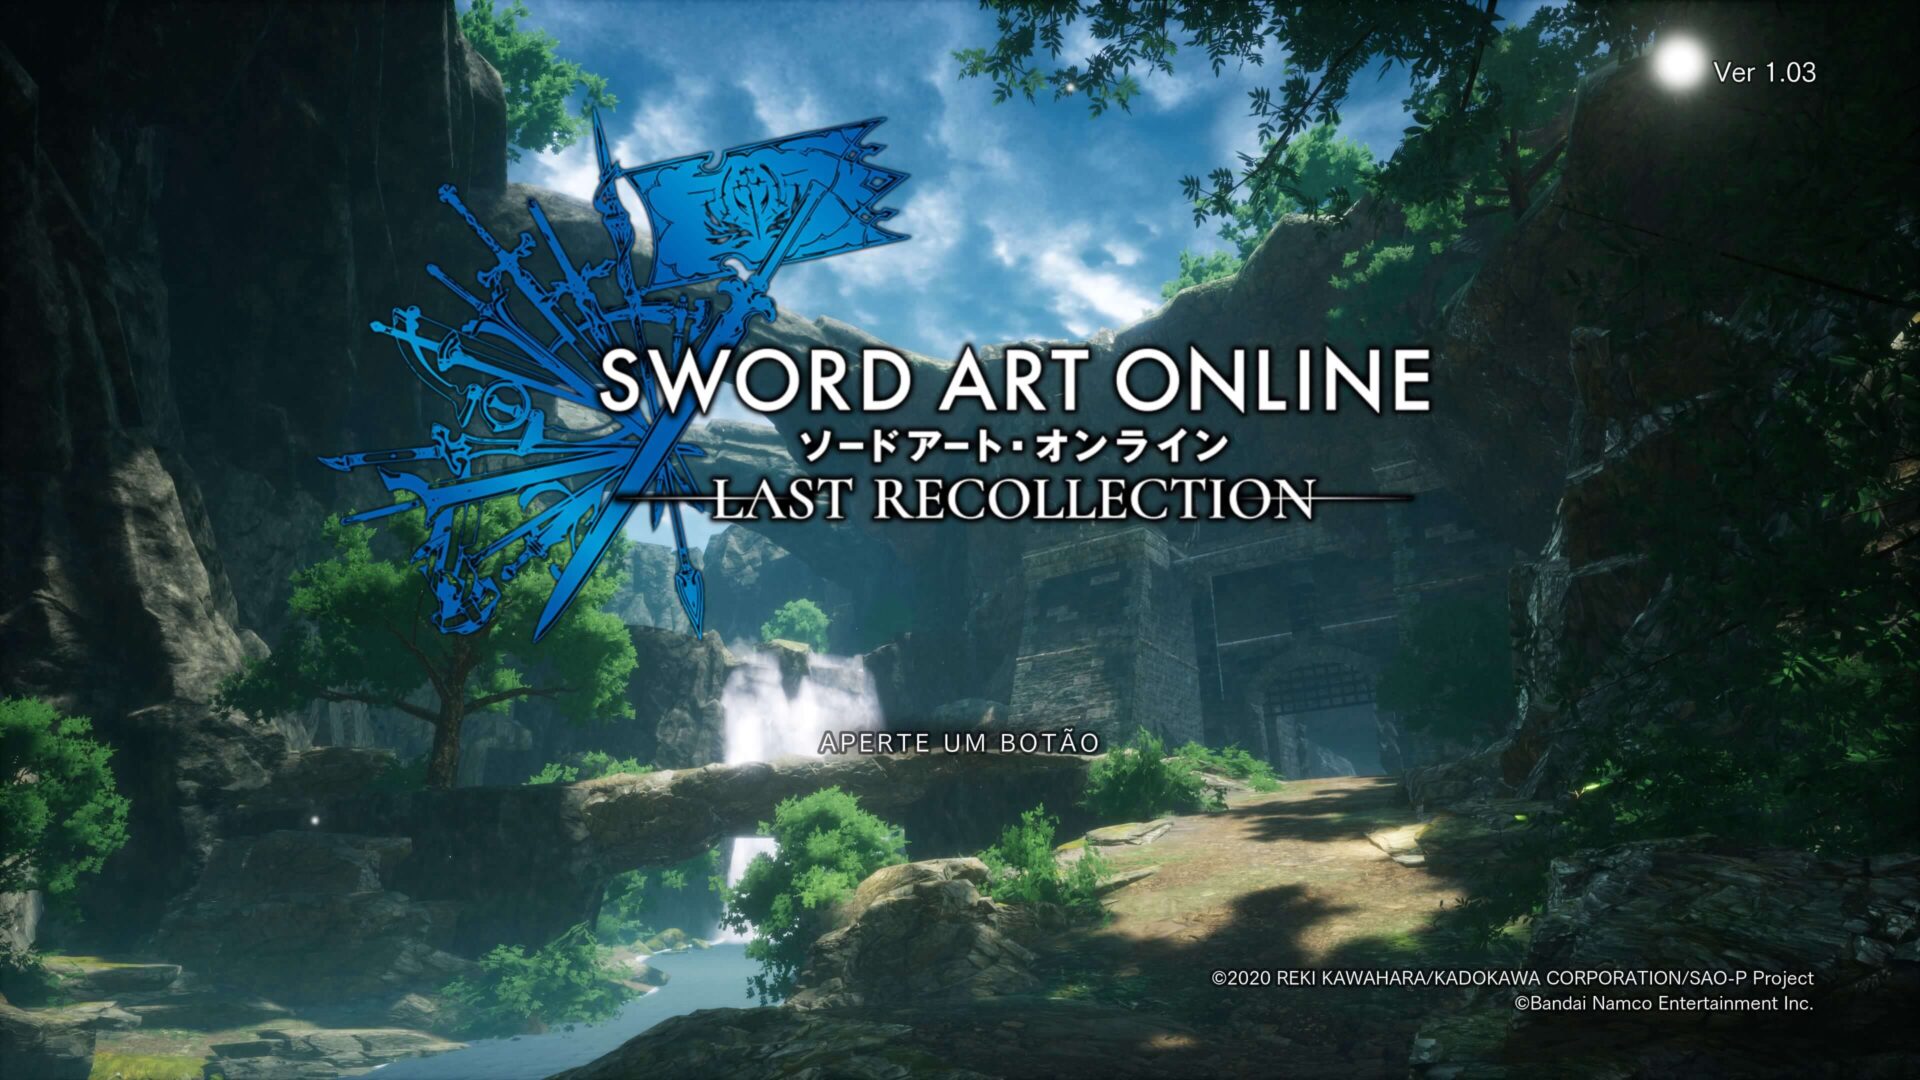 Review - Sword Art Online: Lute, mate, chore, ame, sobreviva